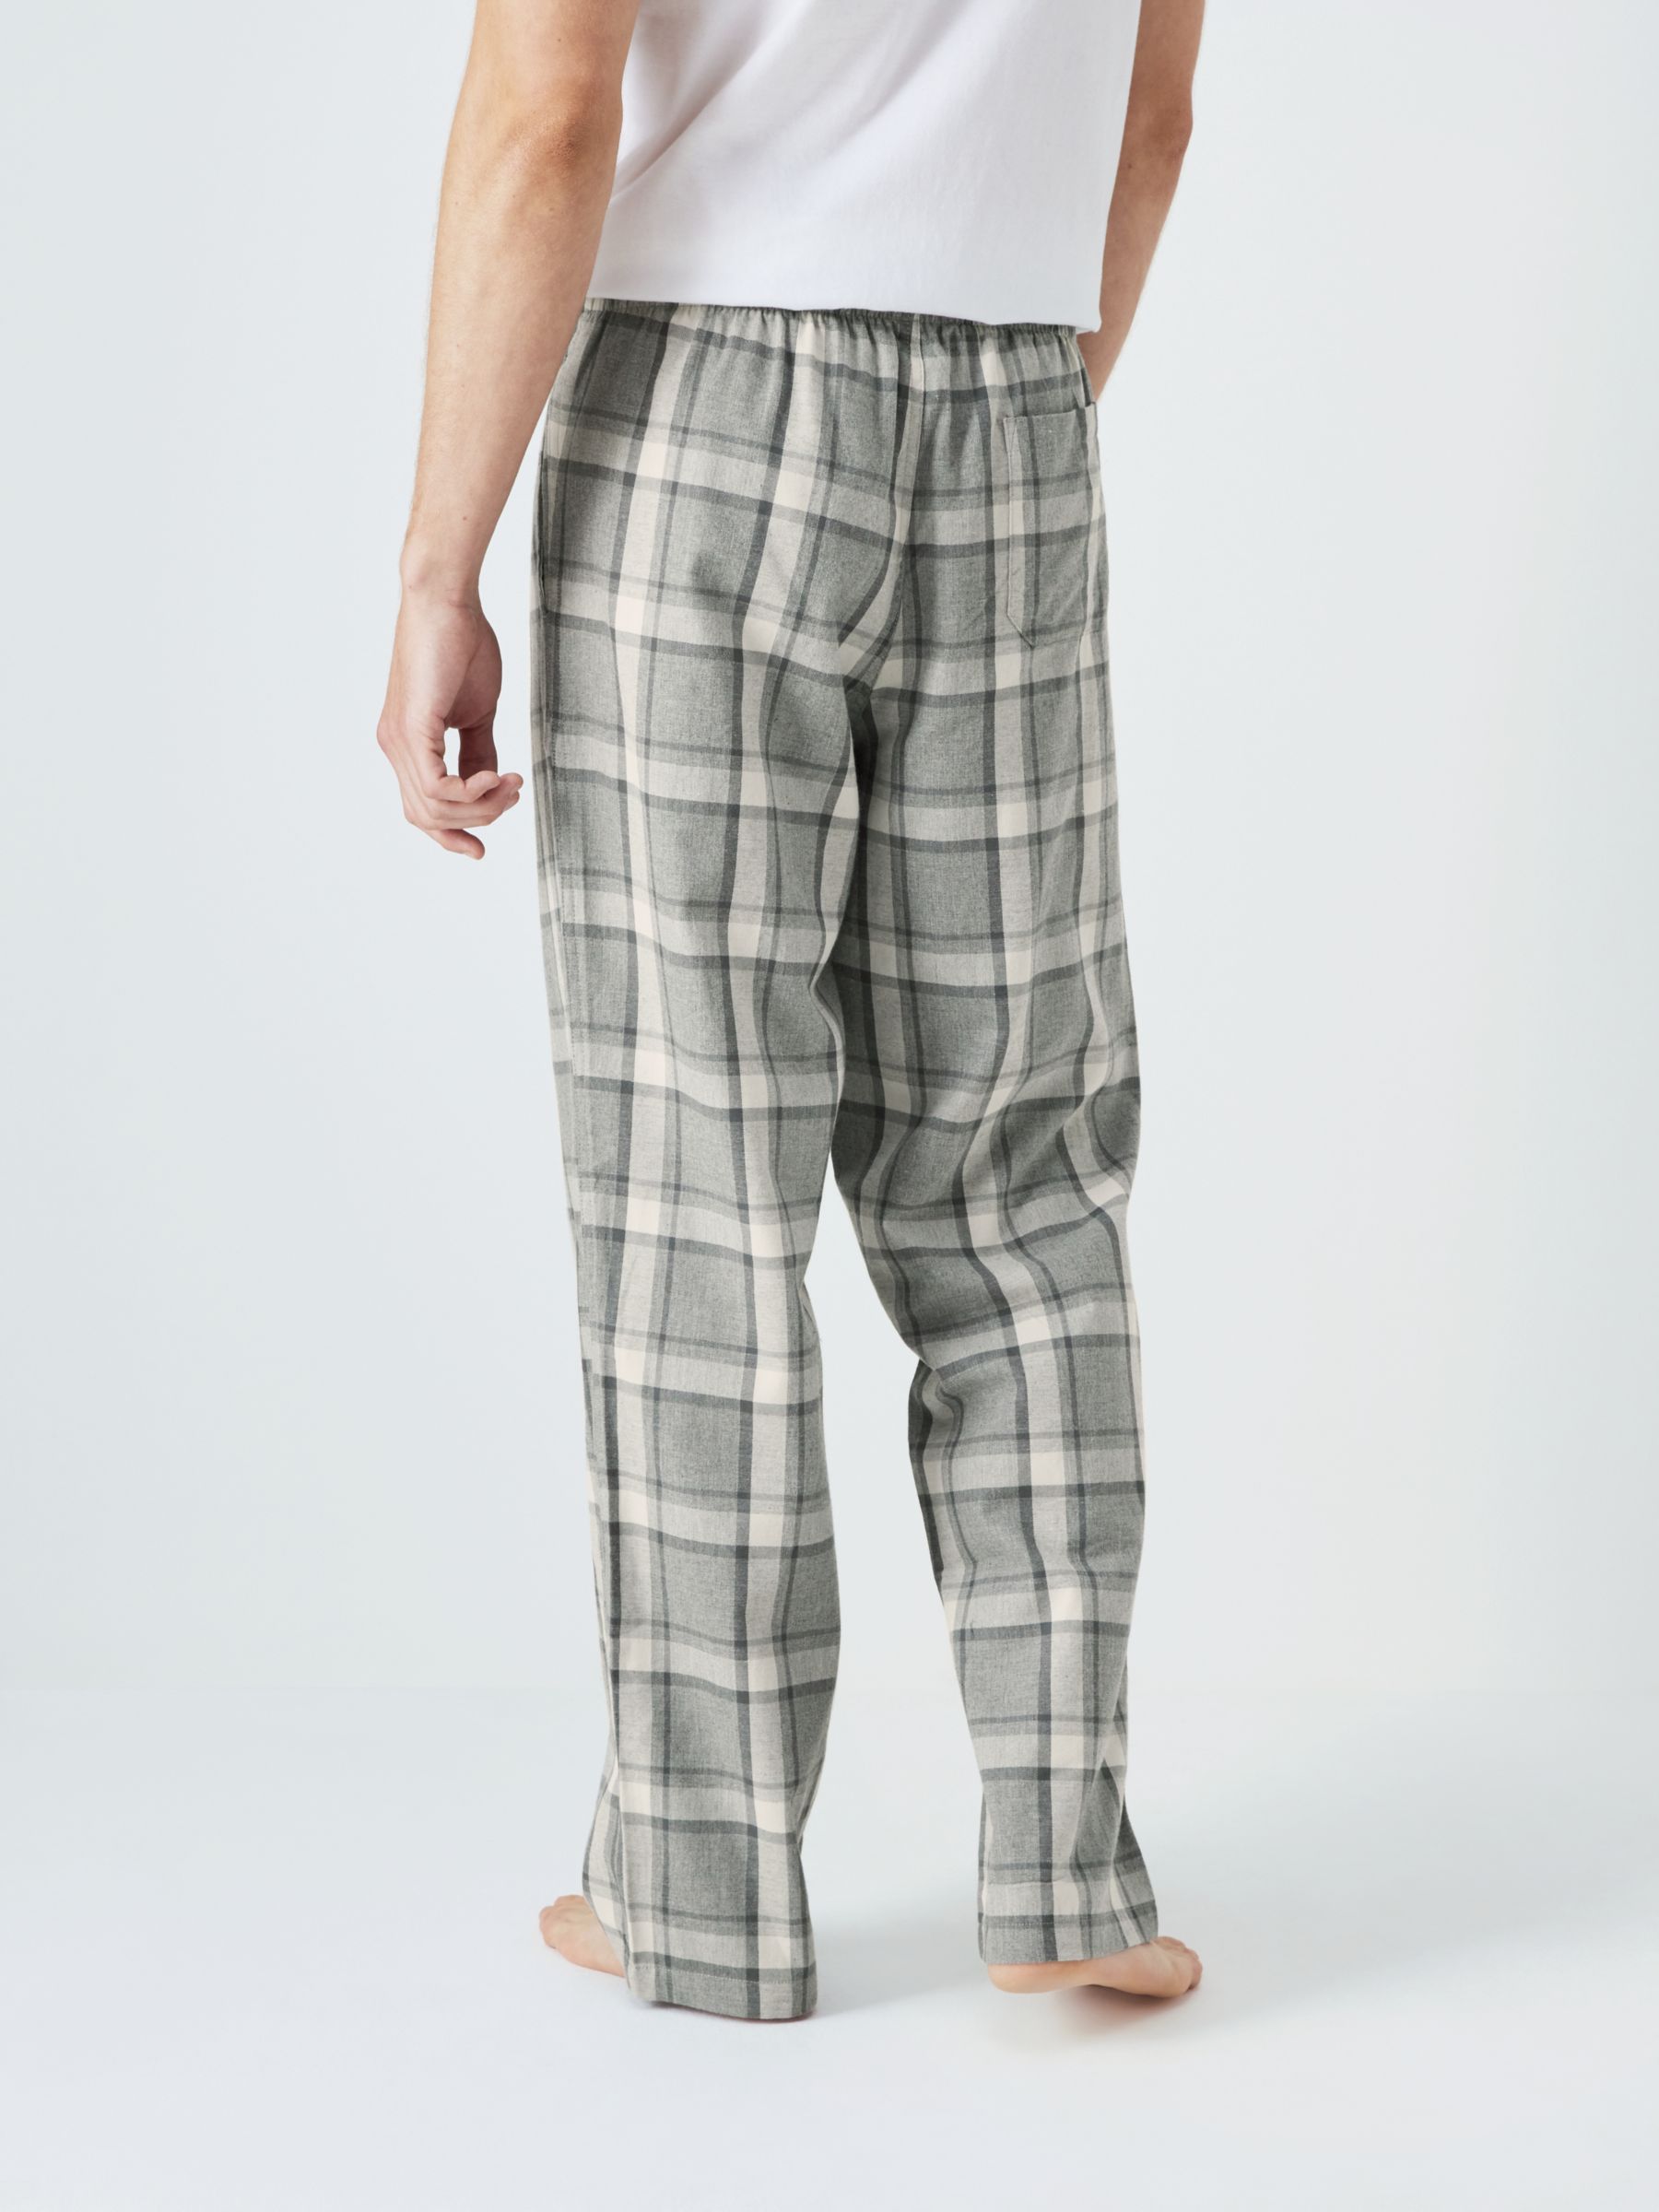 John Lewis Organic Cotton Grid Check Pyjama Bottoms, Grey Check, S